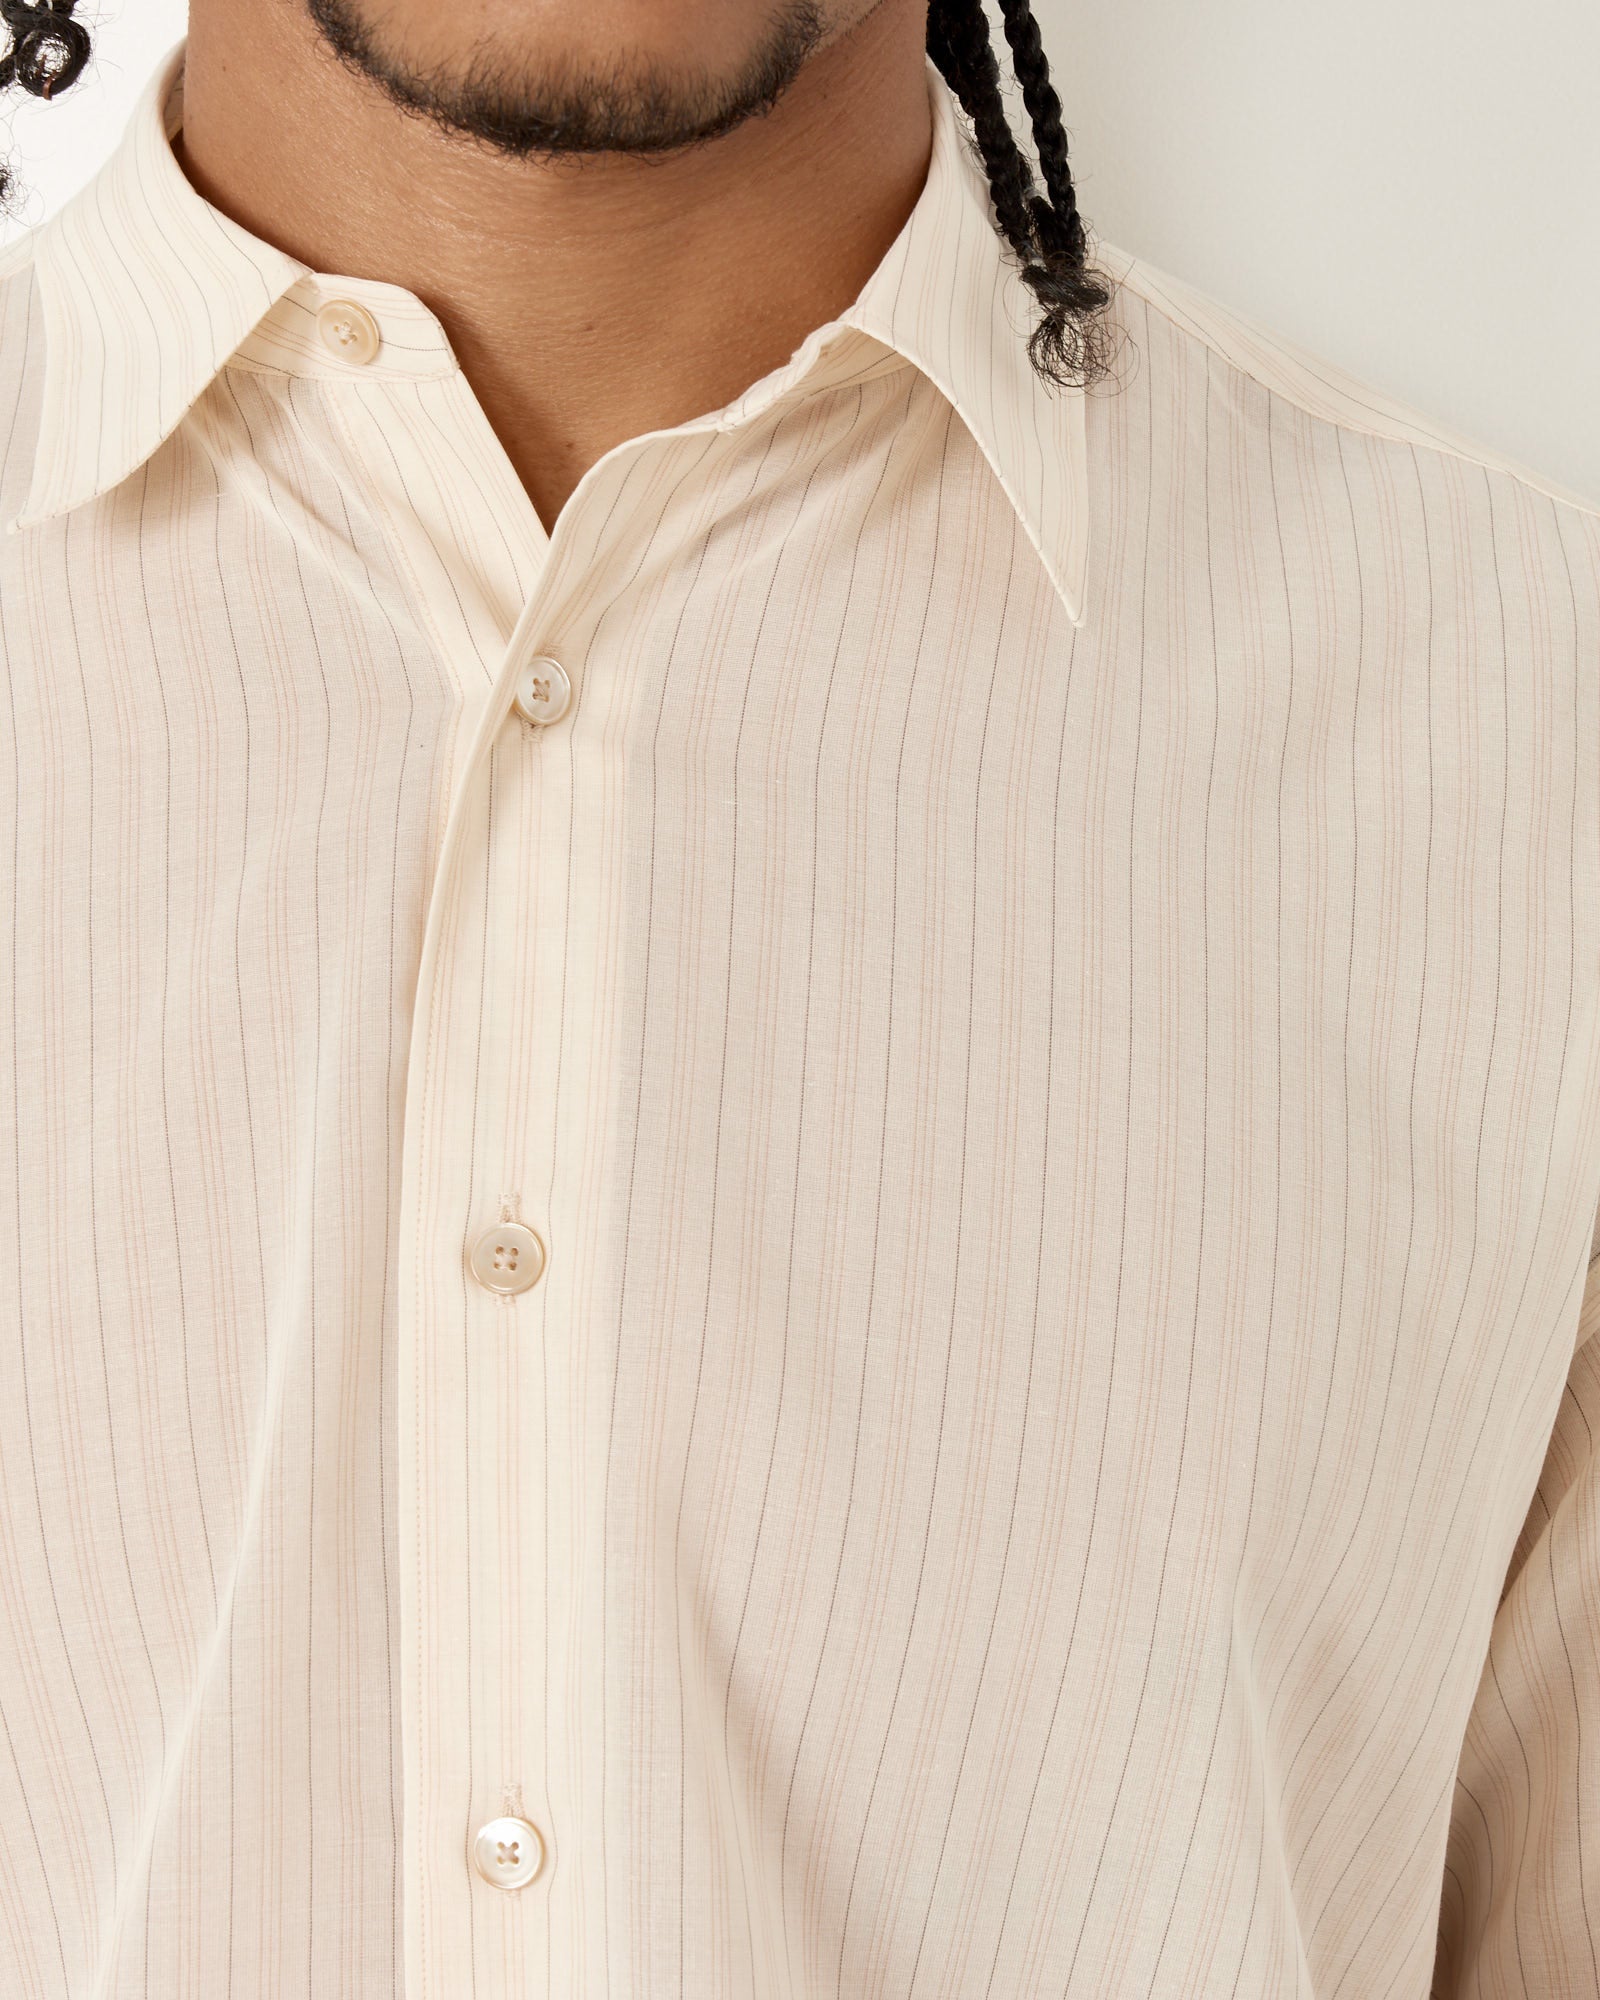 Organdy Stripe Shirt in Light Beige